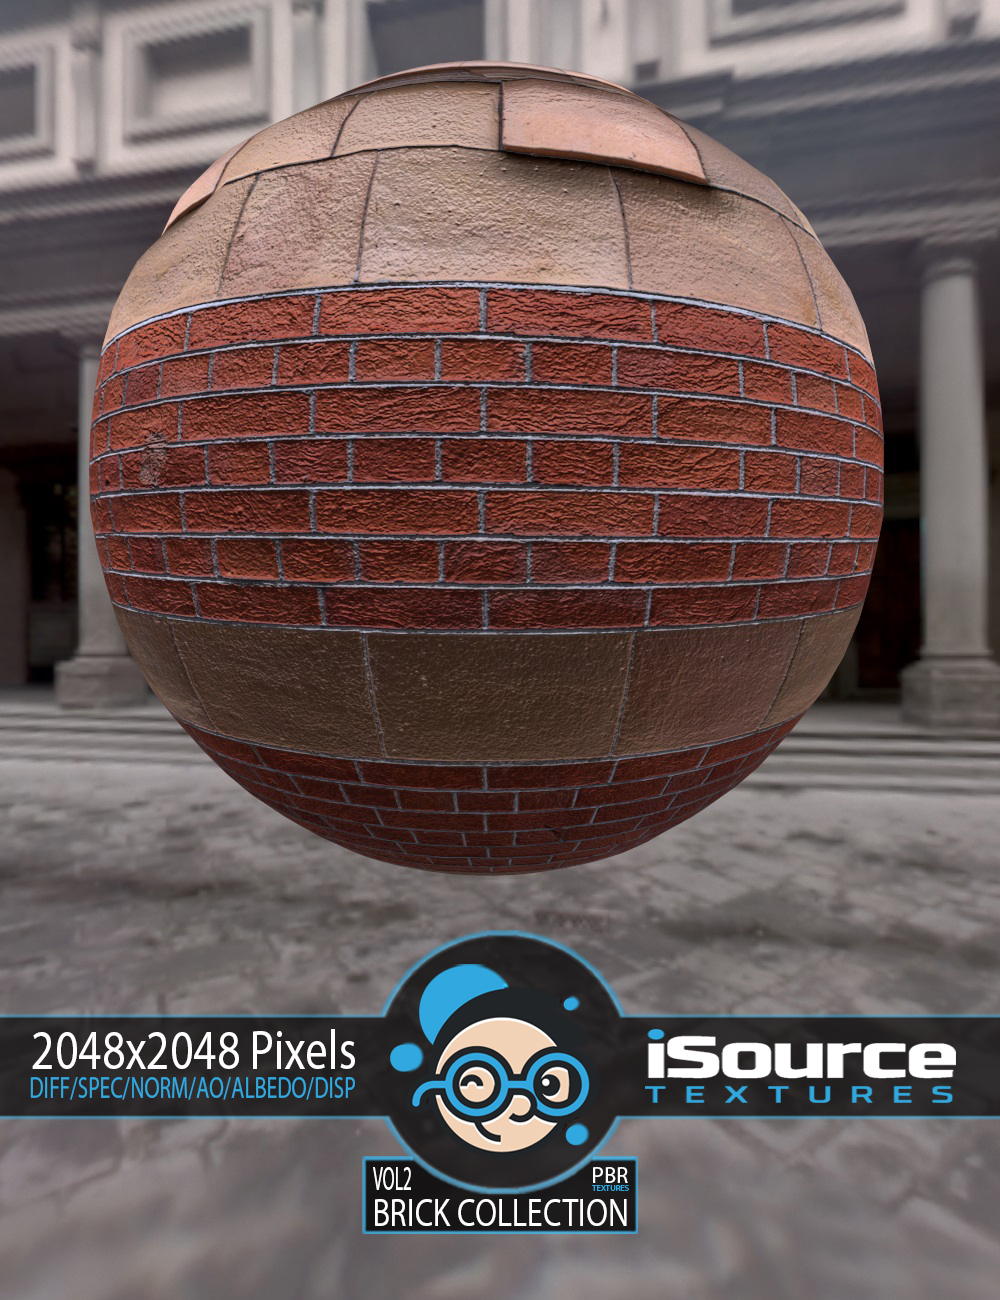 Brick Collection Merchant Resource - Vol2 (PBR Textures) by: iSourceTextures, 3D Models by Daz 3D